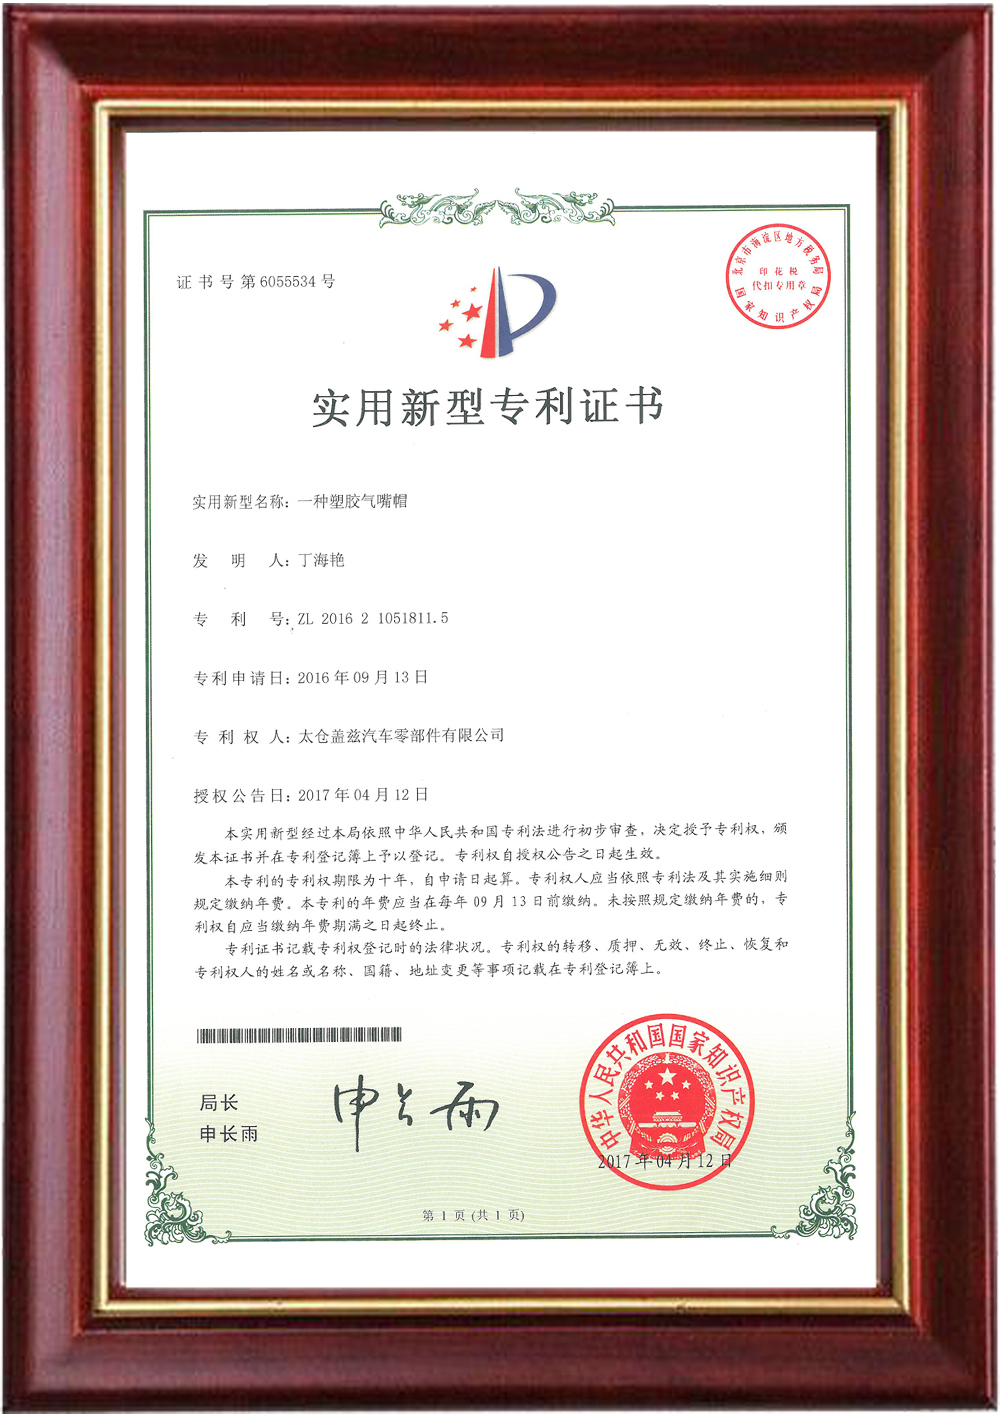 Utility model patent certificate - gas cap